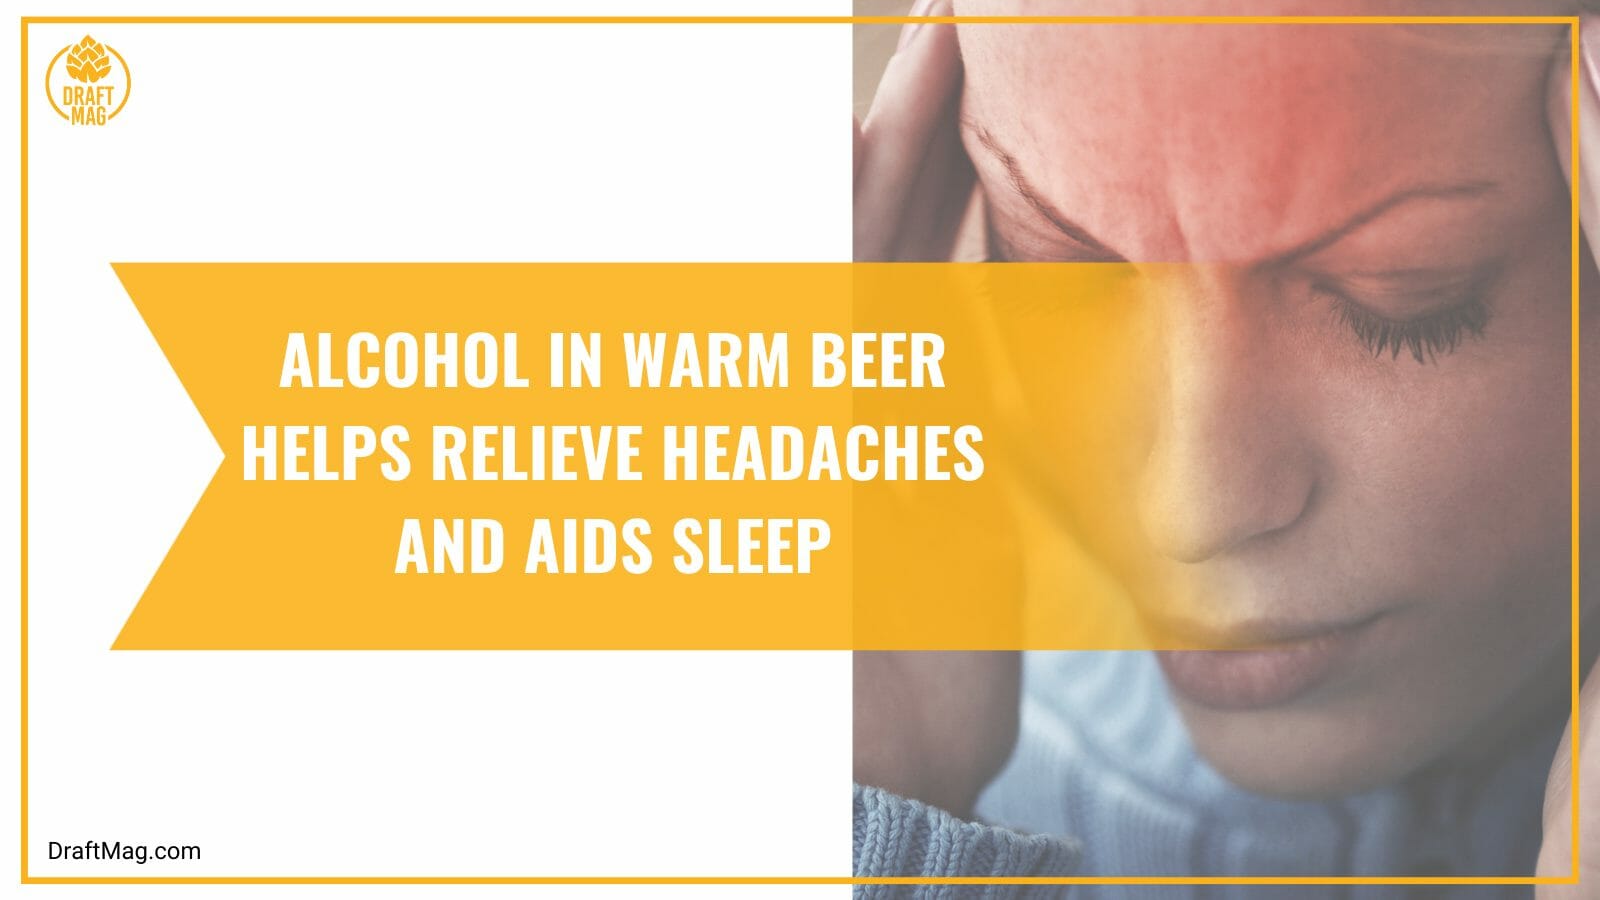 Warm beer helps relieve headaches